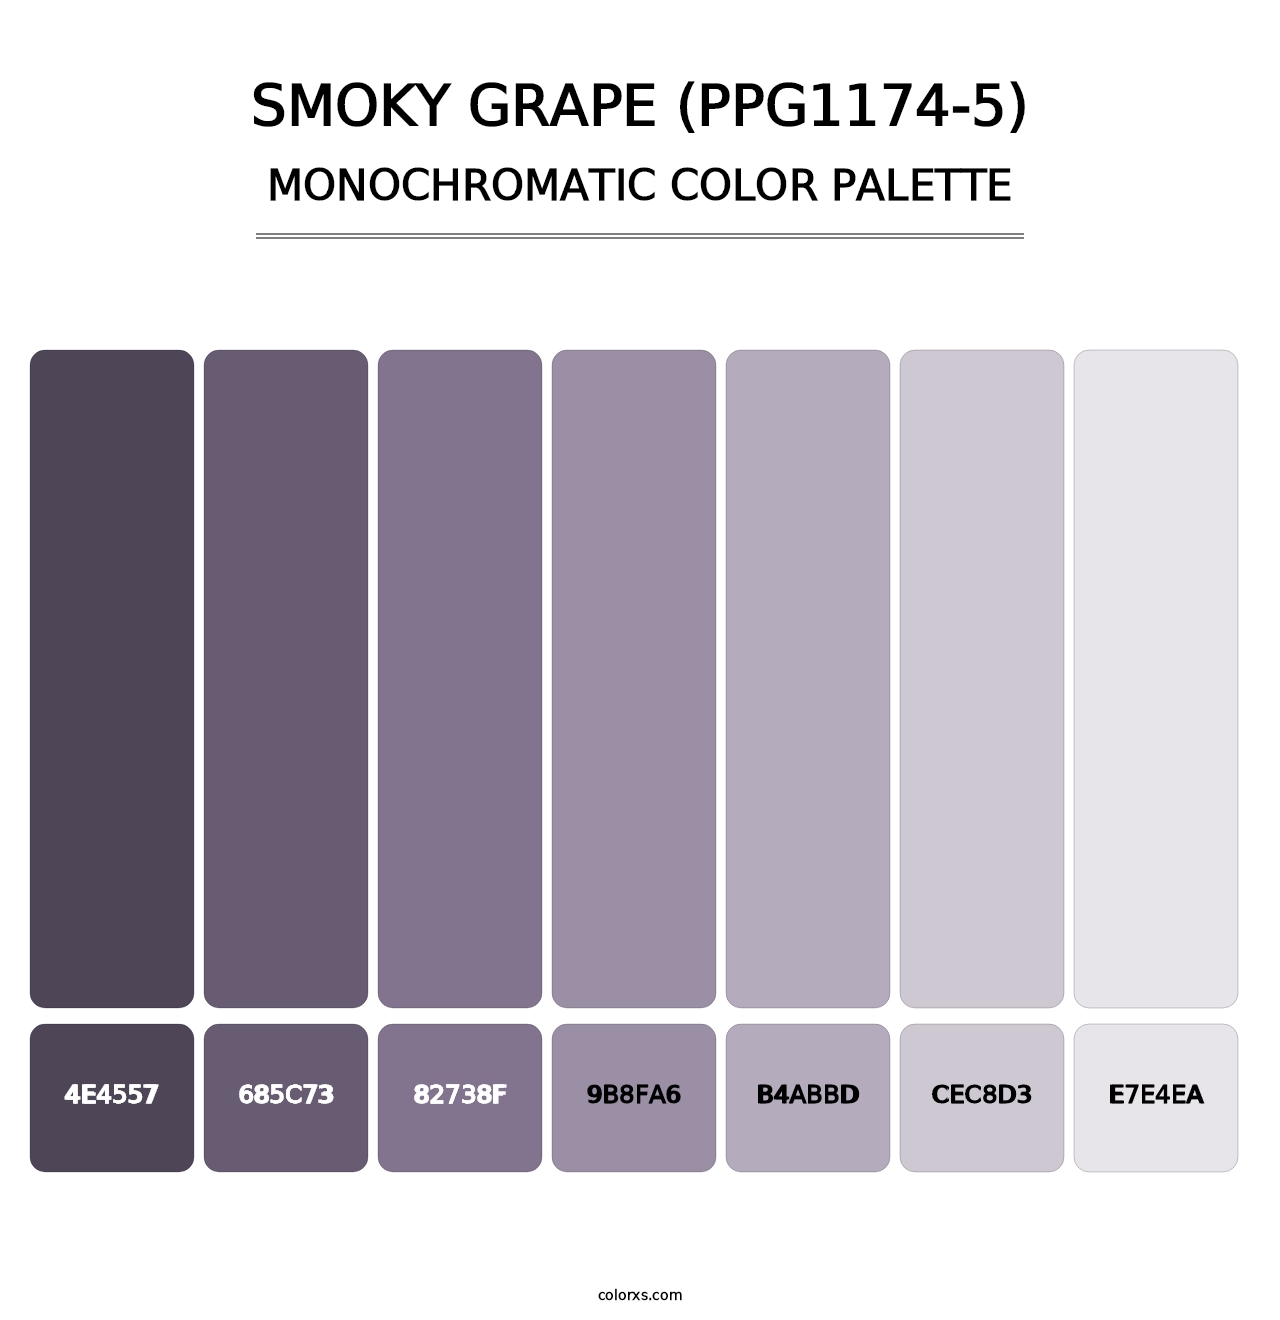 Smoky Grape (PPG1174-5) - Monochromatic Color Palette